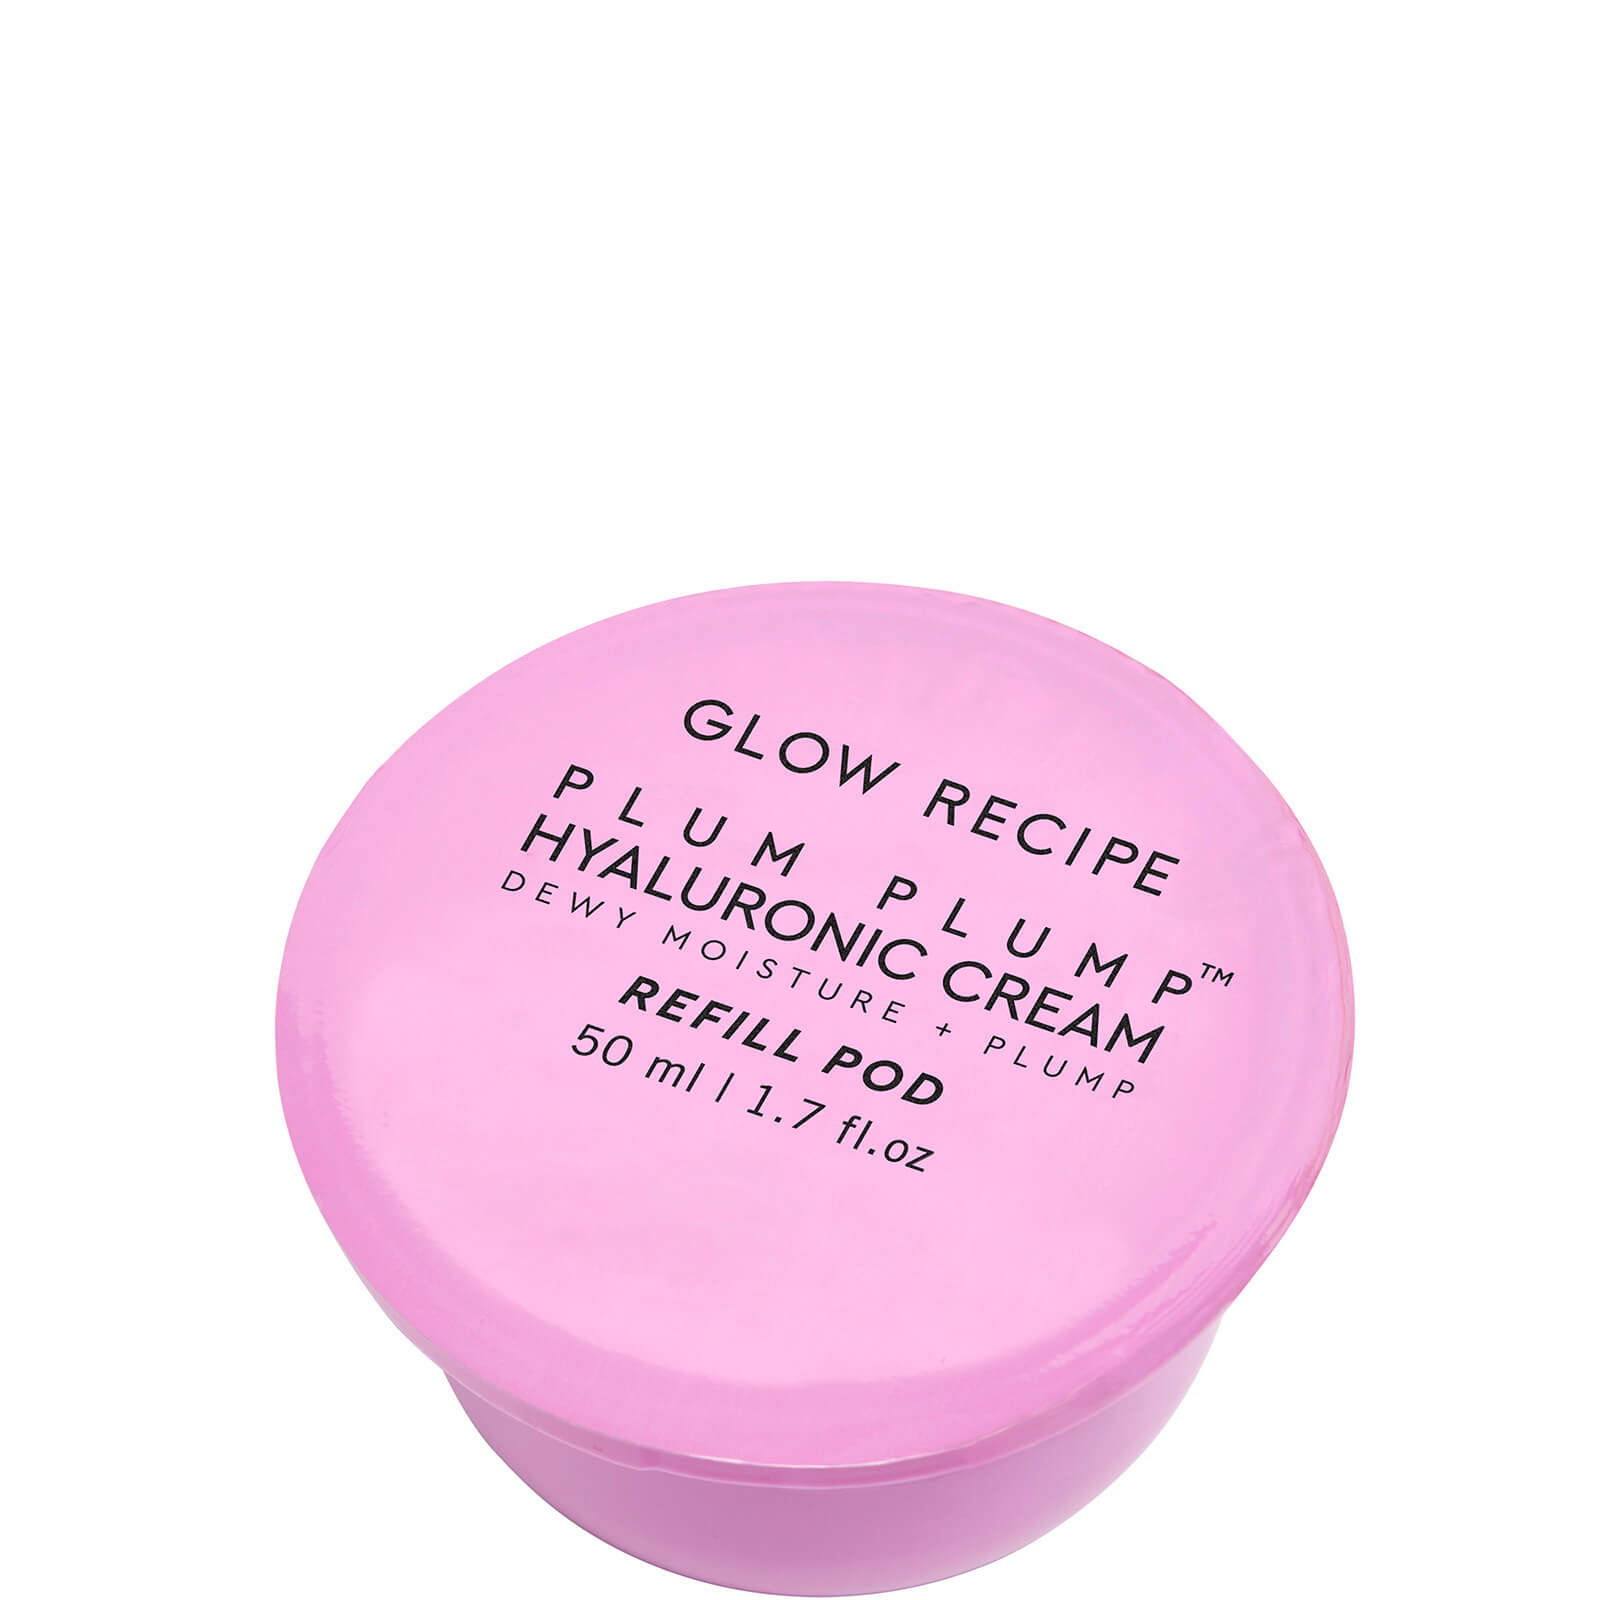 Photos - Cream / Lotion Glow Recipe Plum Plump Hyaluronic Cream Refill Pod 50ml